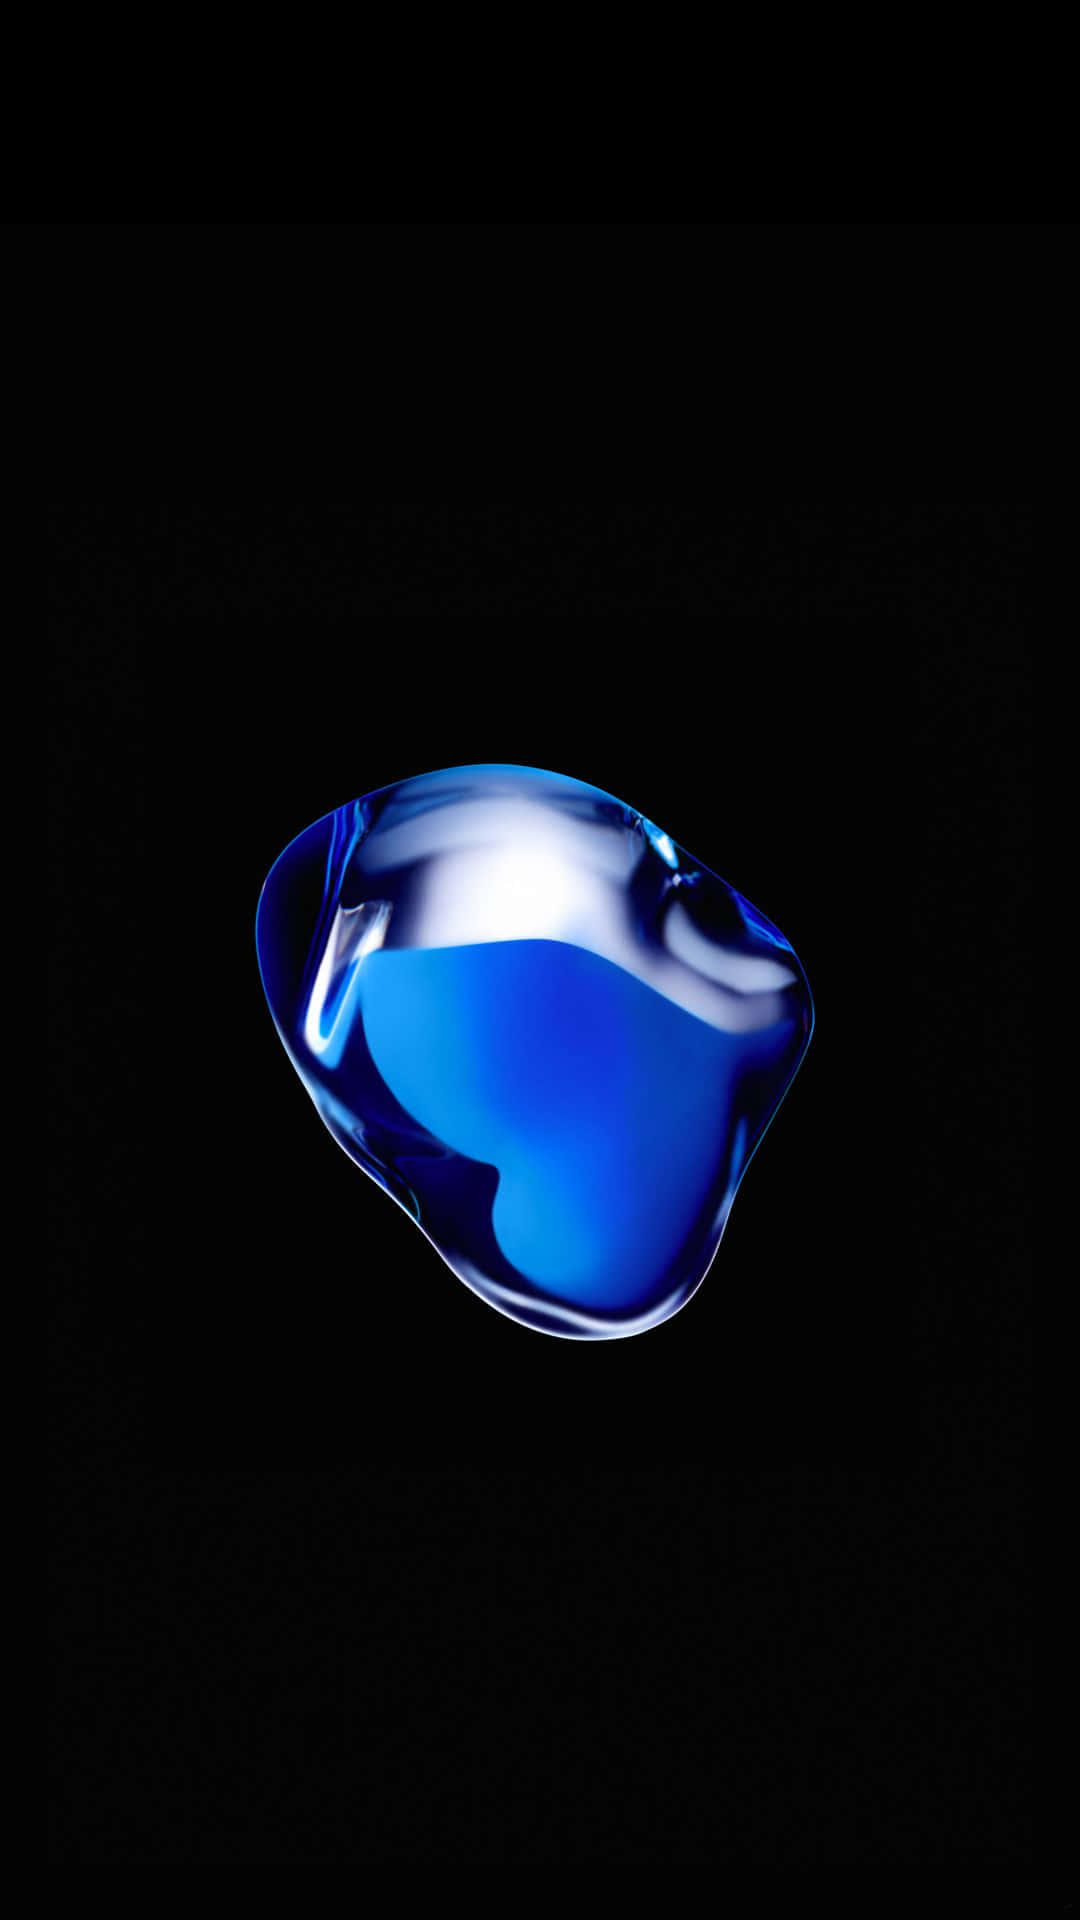 A Blue Glass Object Wallpaper